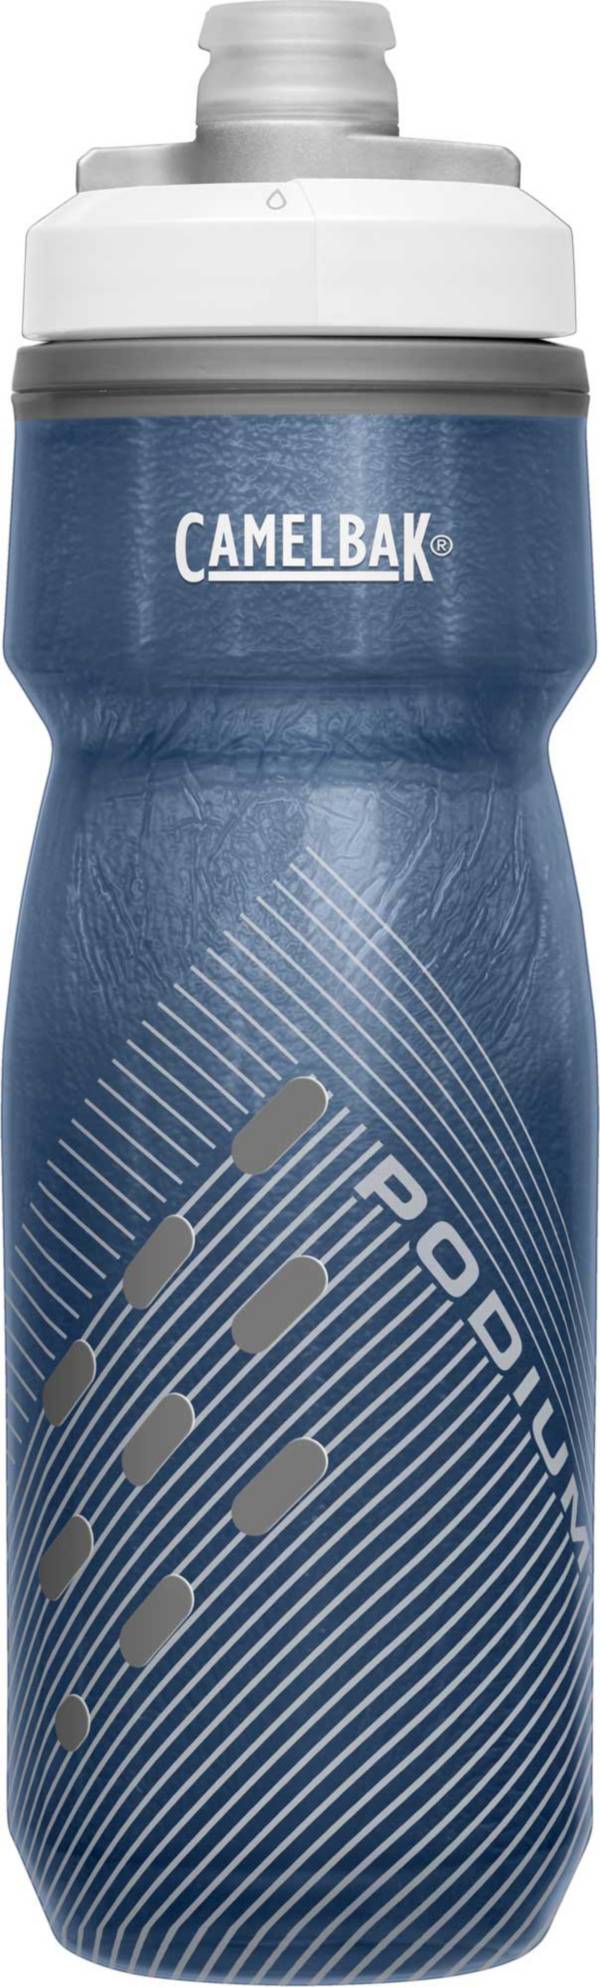 CamelBak Podium Chill 21 oz. Water Bottle product image